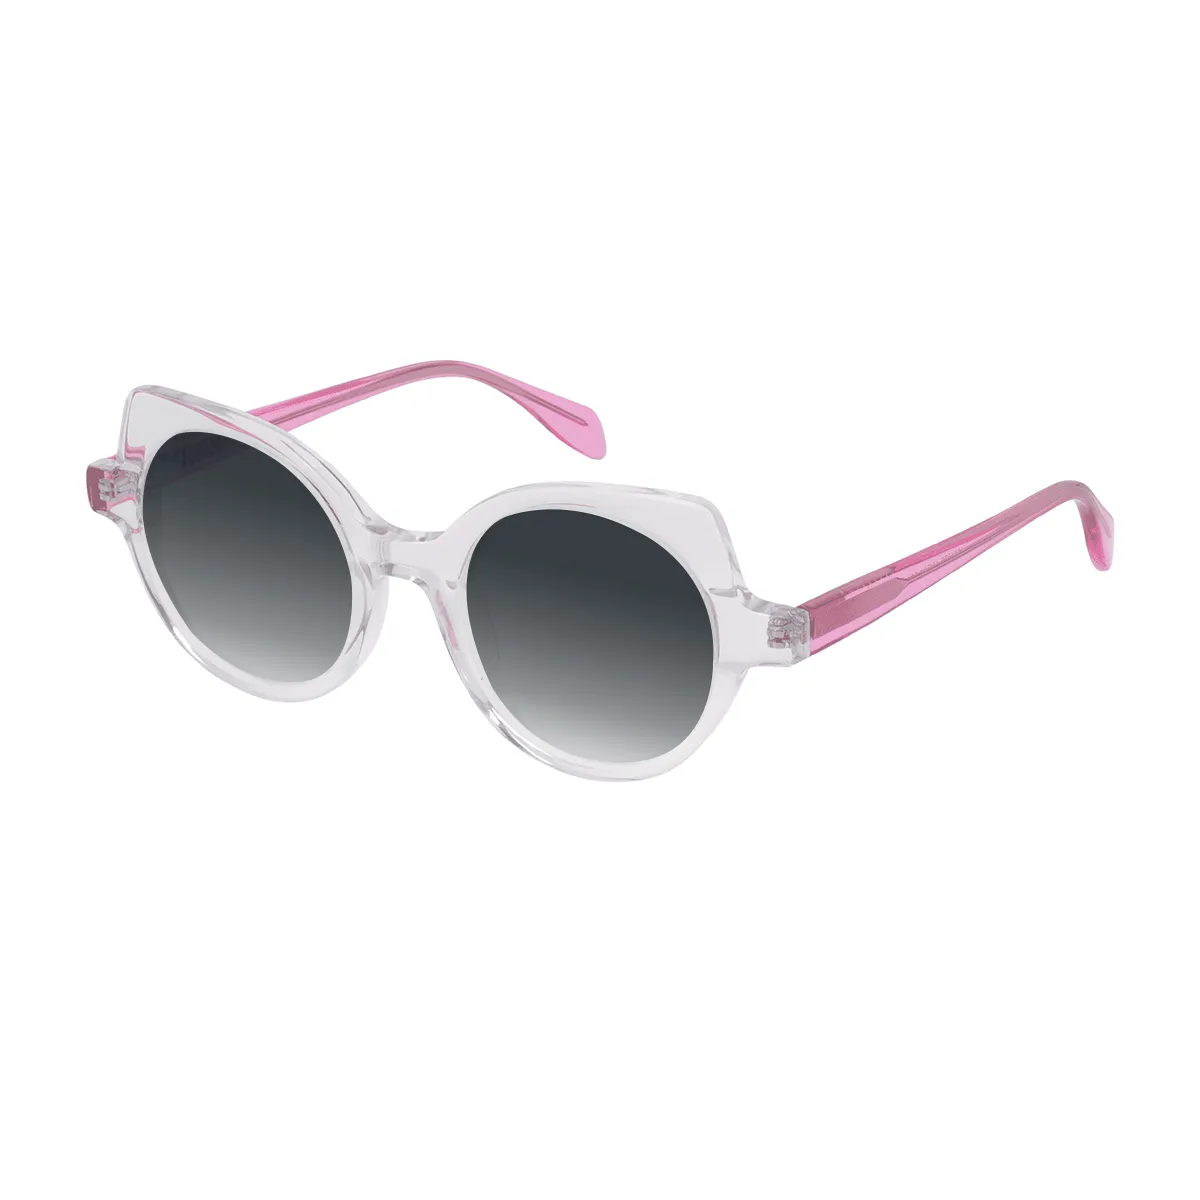 Archbald - Round Transparent Sunglasses for Women